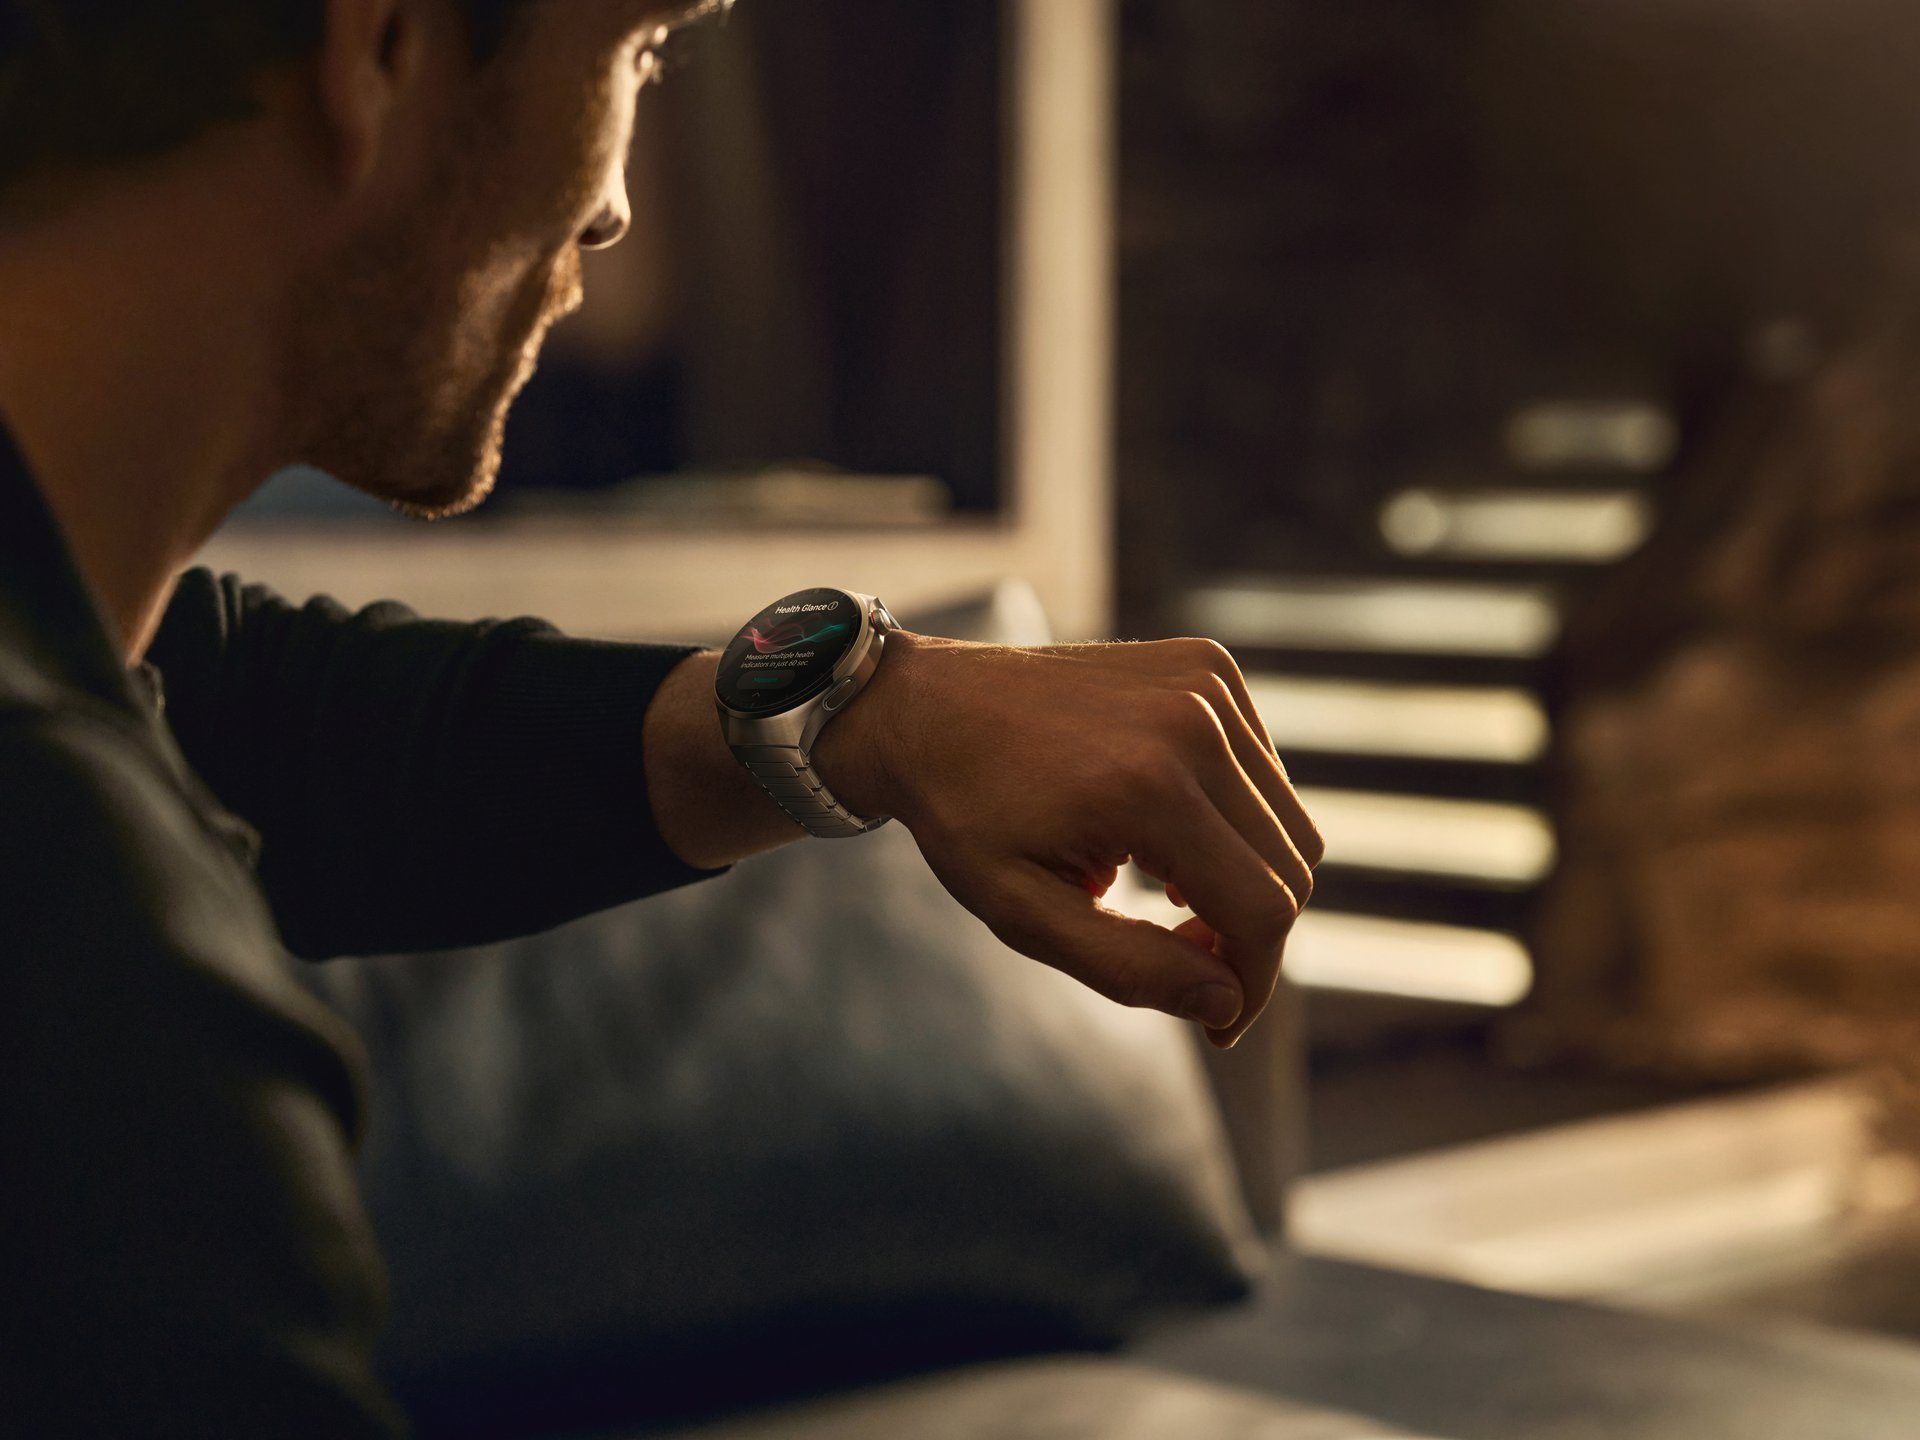 Huawei Watch 4 Pro Smartwatch (3,81 cm/1,5 Zoll, Titan | Harmony OS) silberfarben